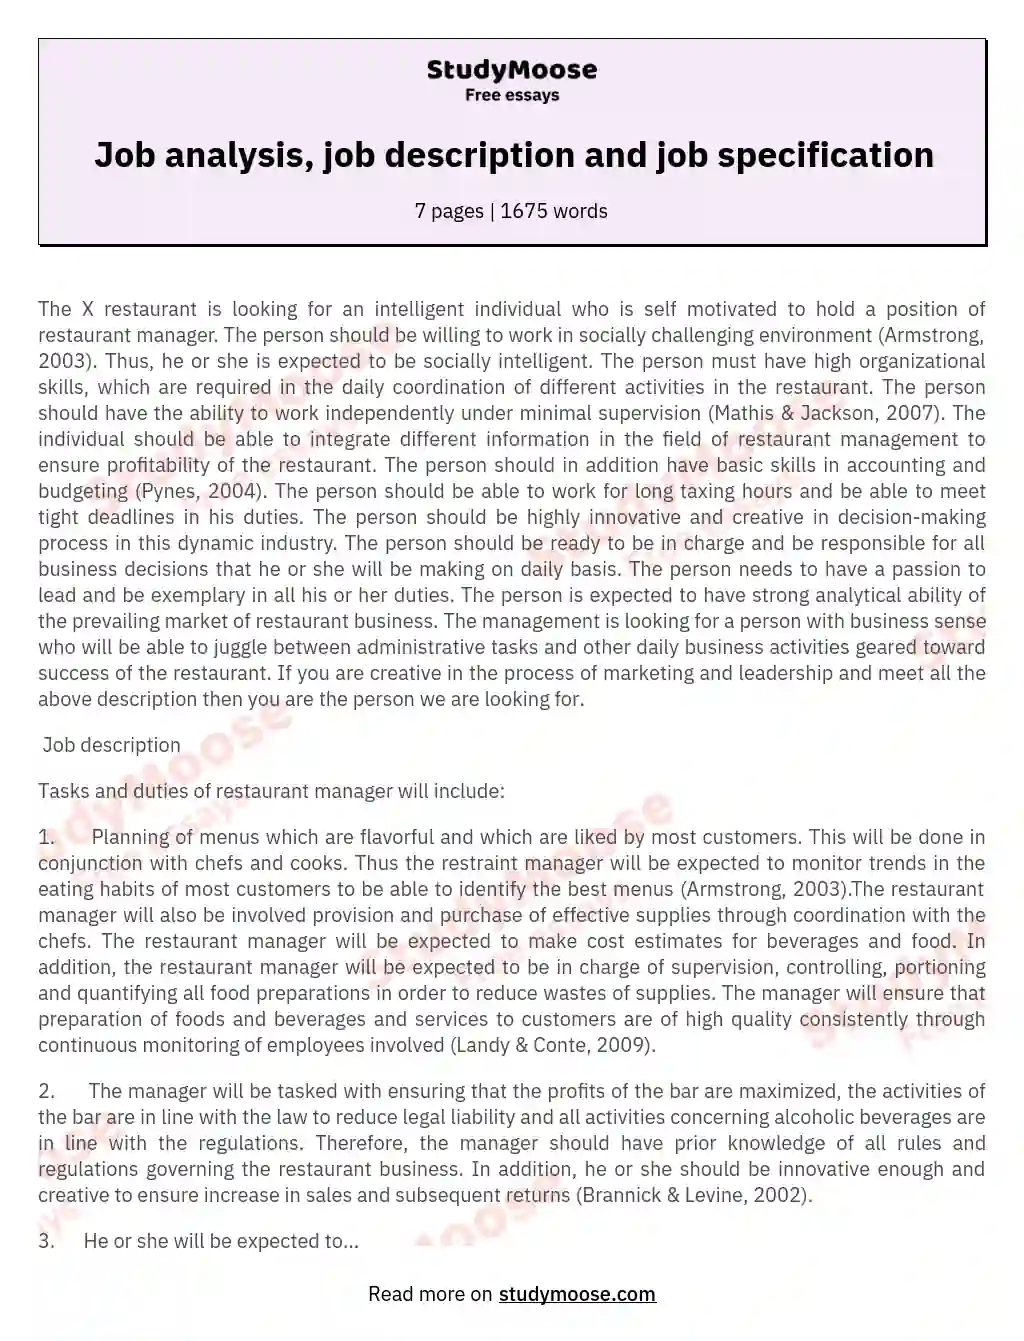 Job analysis, job description and job specification